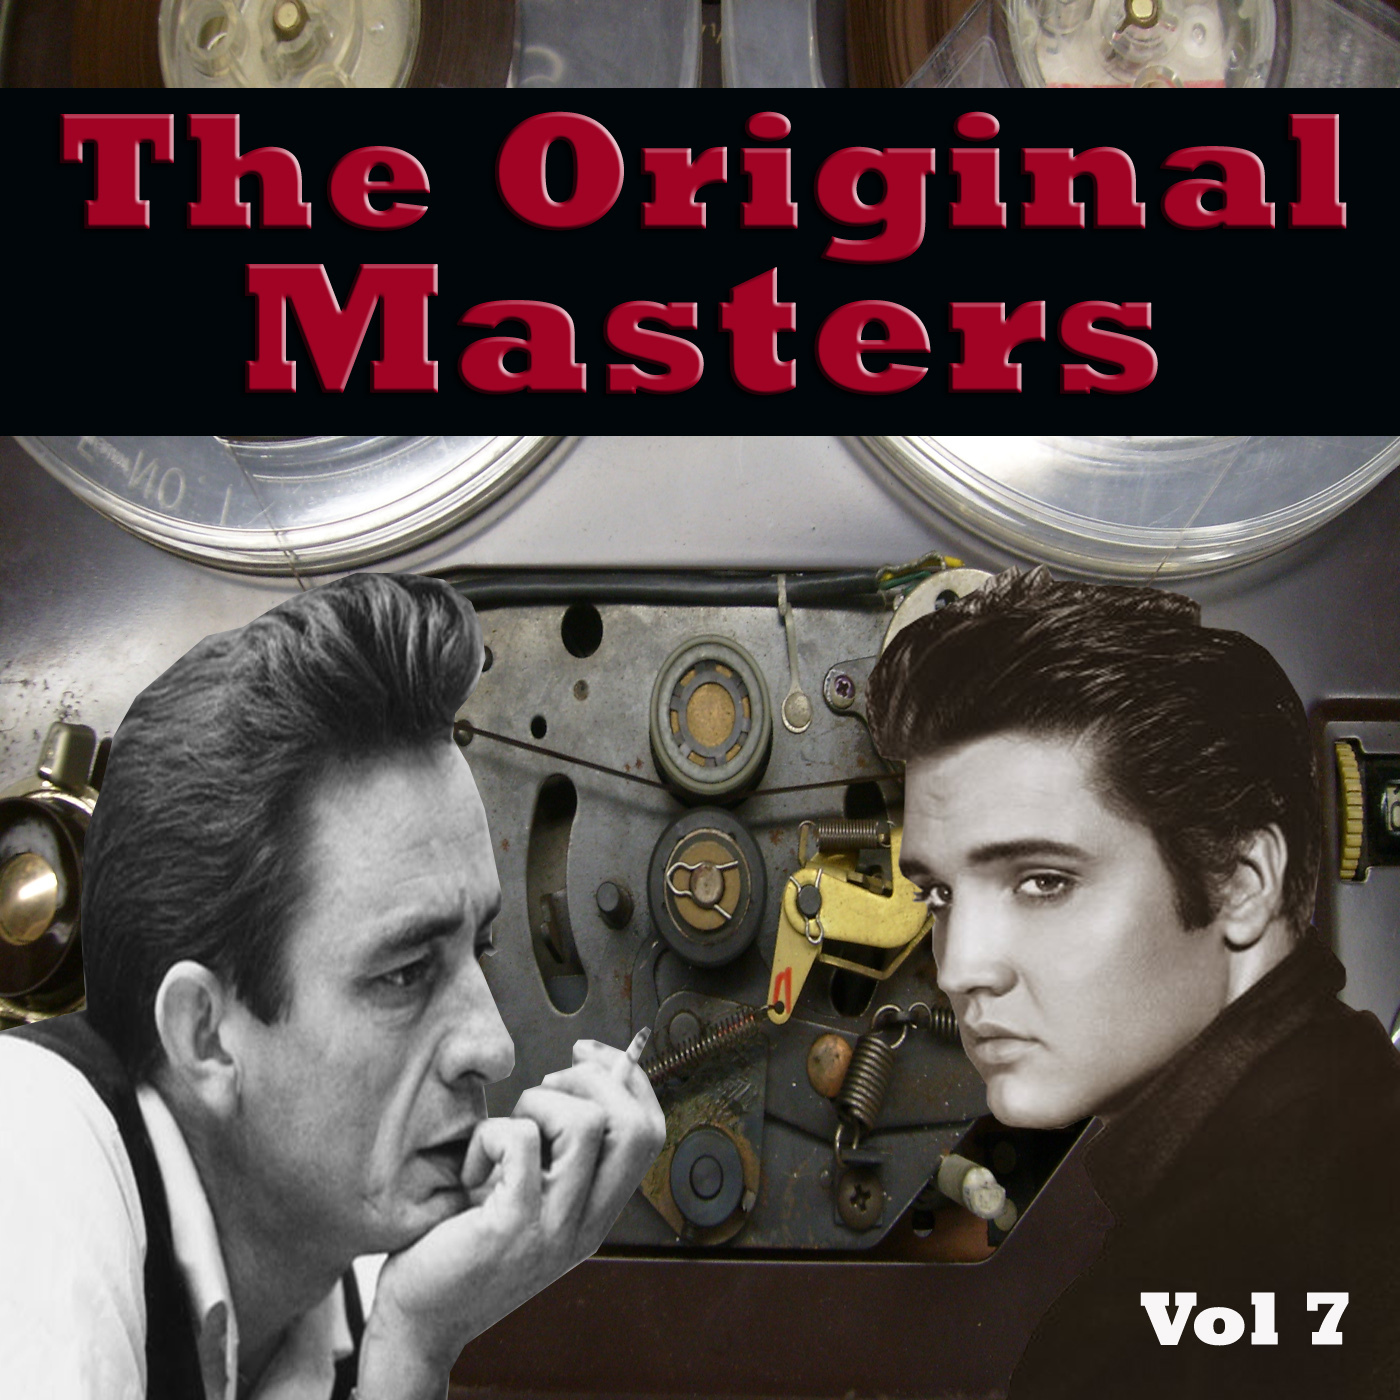 The Original Masters Vol 7